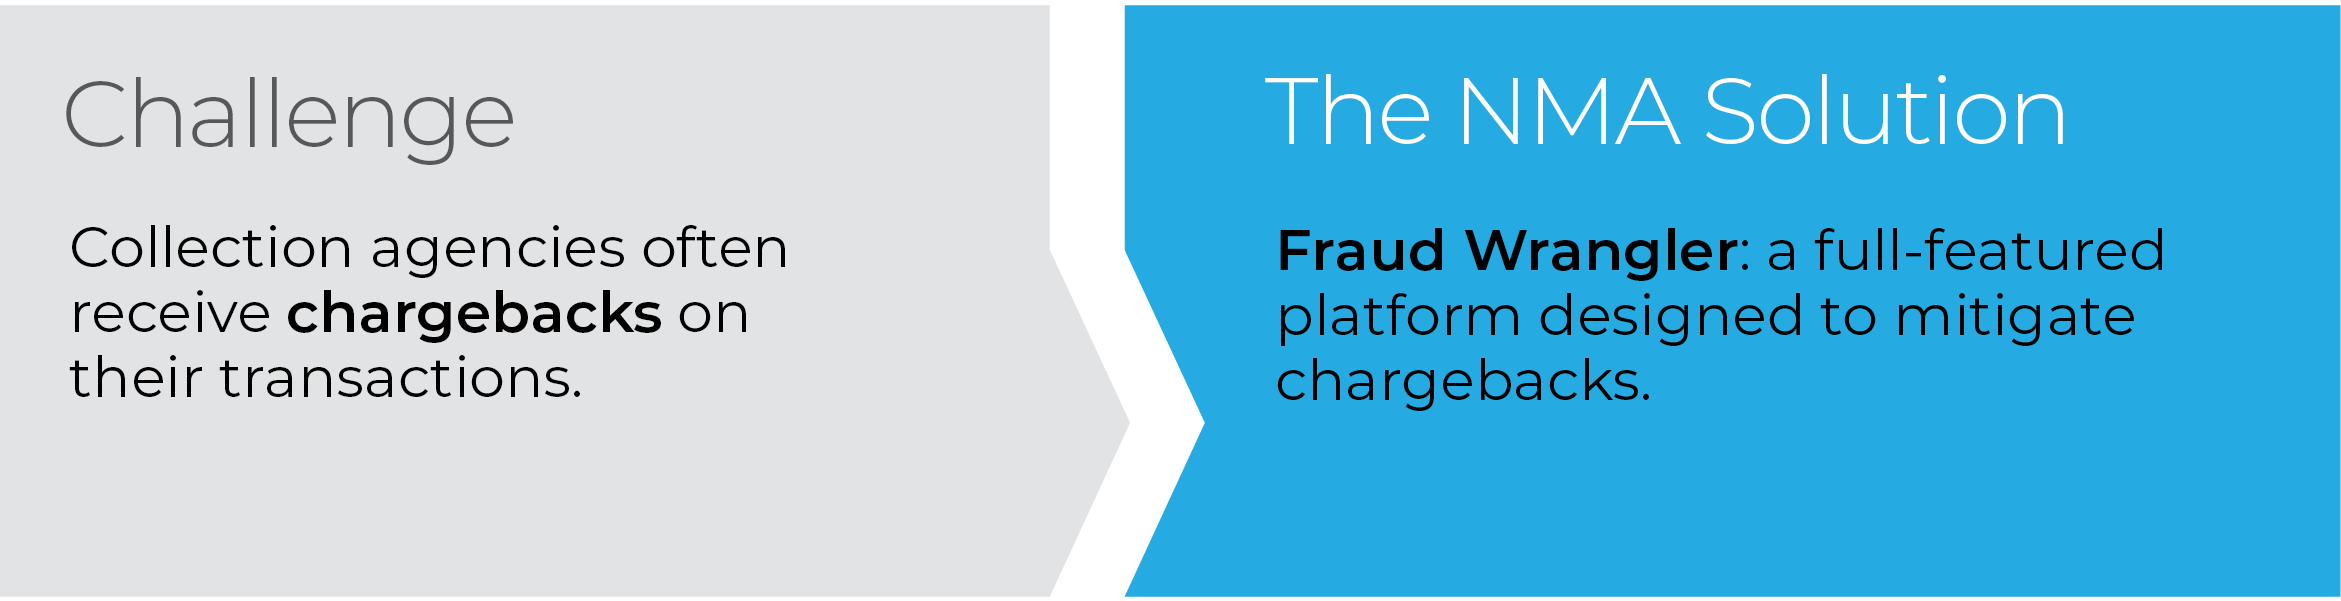 Fraud Wrangler: a full-featured platform designed to mitigate chargebacks.